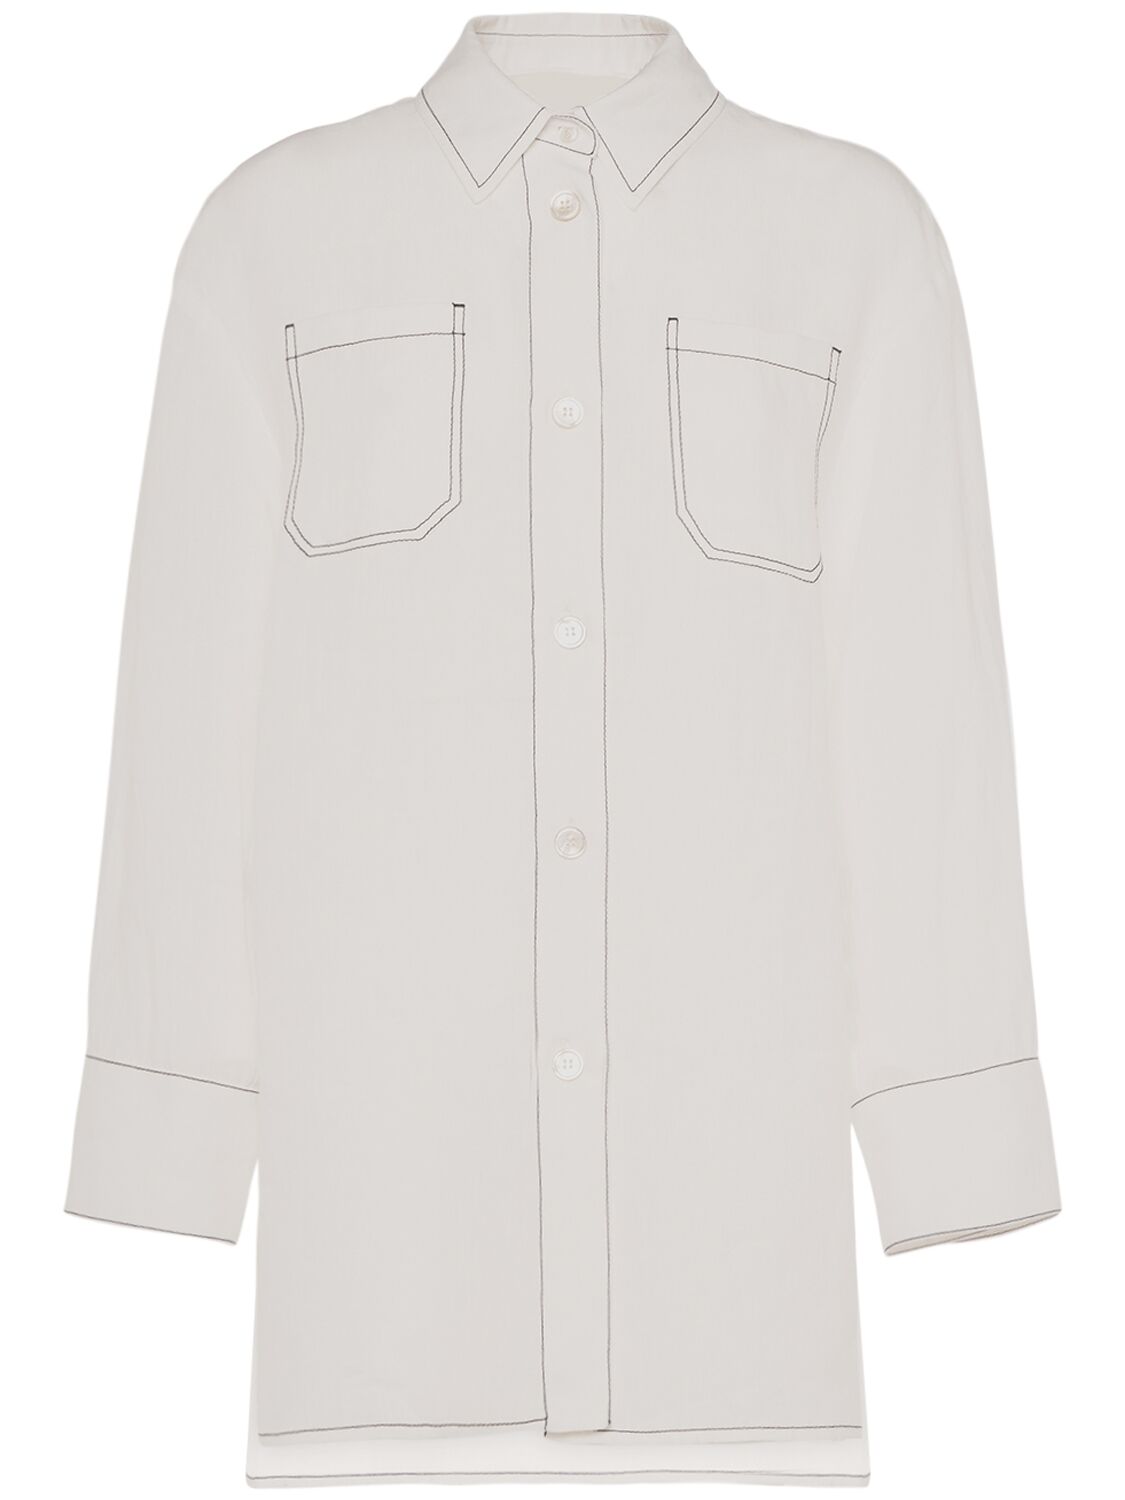 's Max Mara Daria Linen Shirt W/ Stitching Details In White